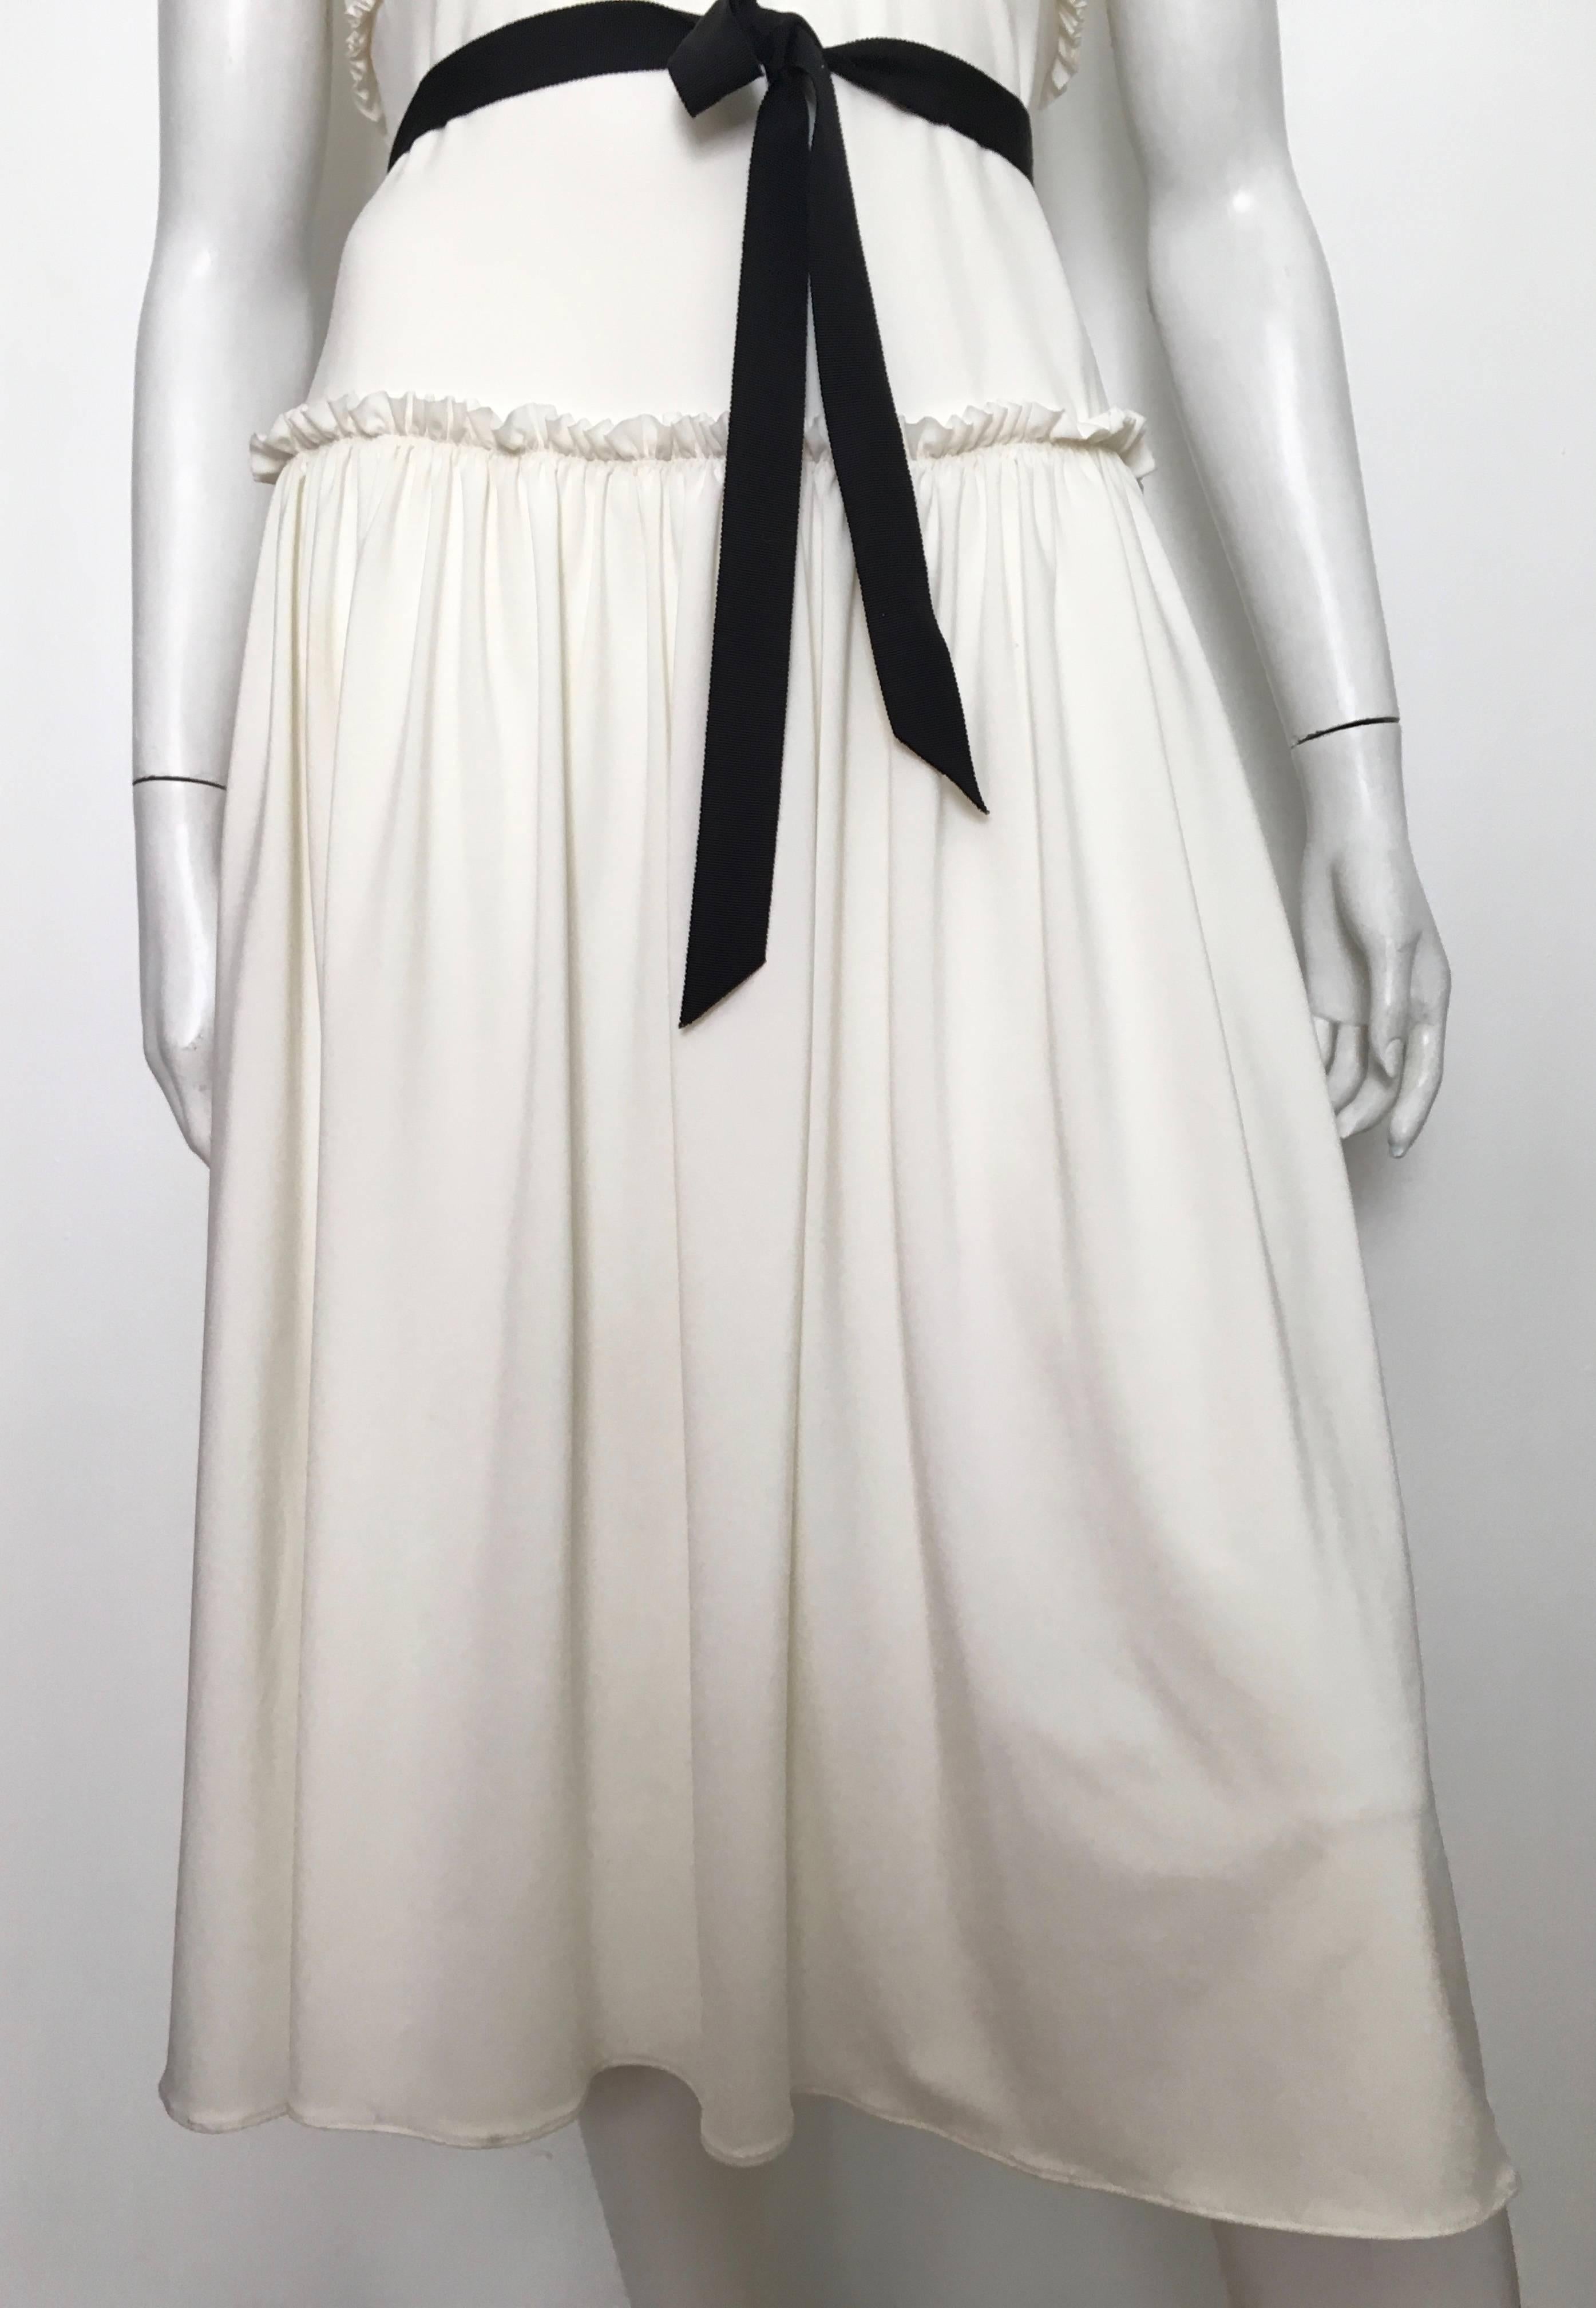 Gray Vera Wang 1990s White Jersey Sleeveless Dress Size 8. For Sale